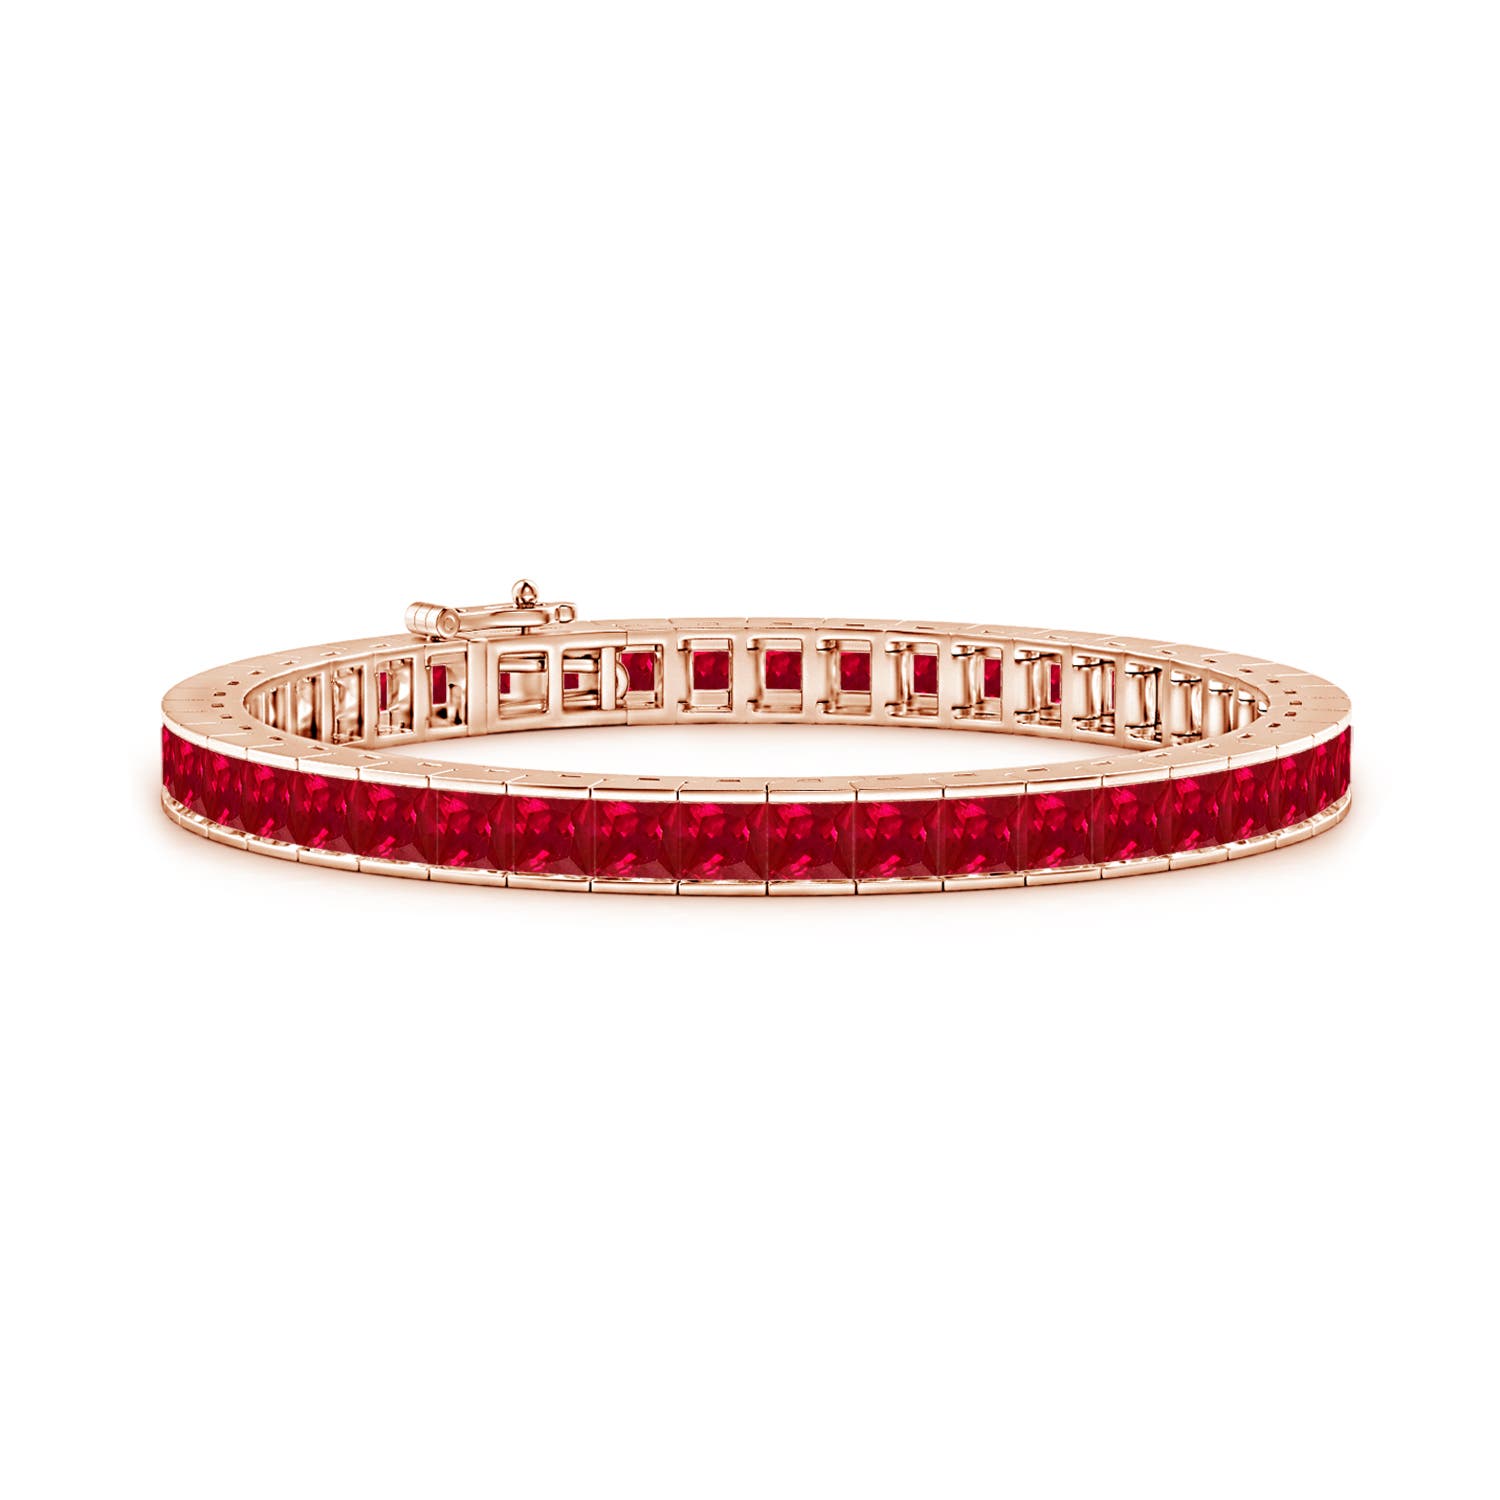 Channel-set square ruby angara tennis bracelet